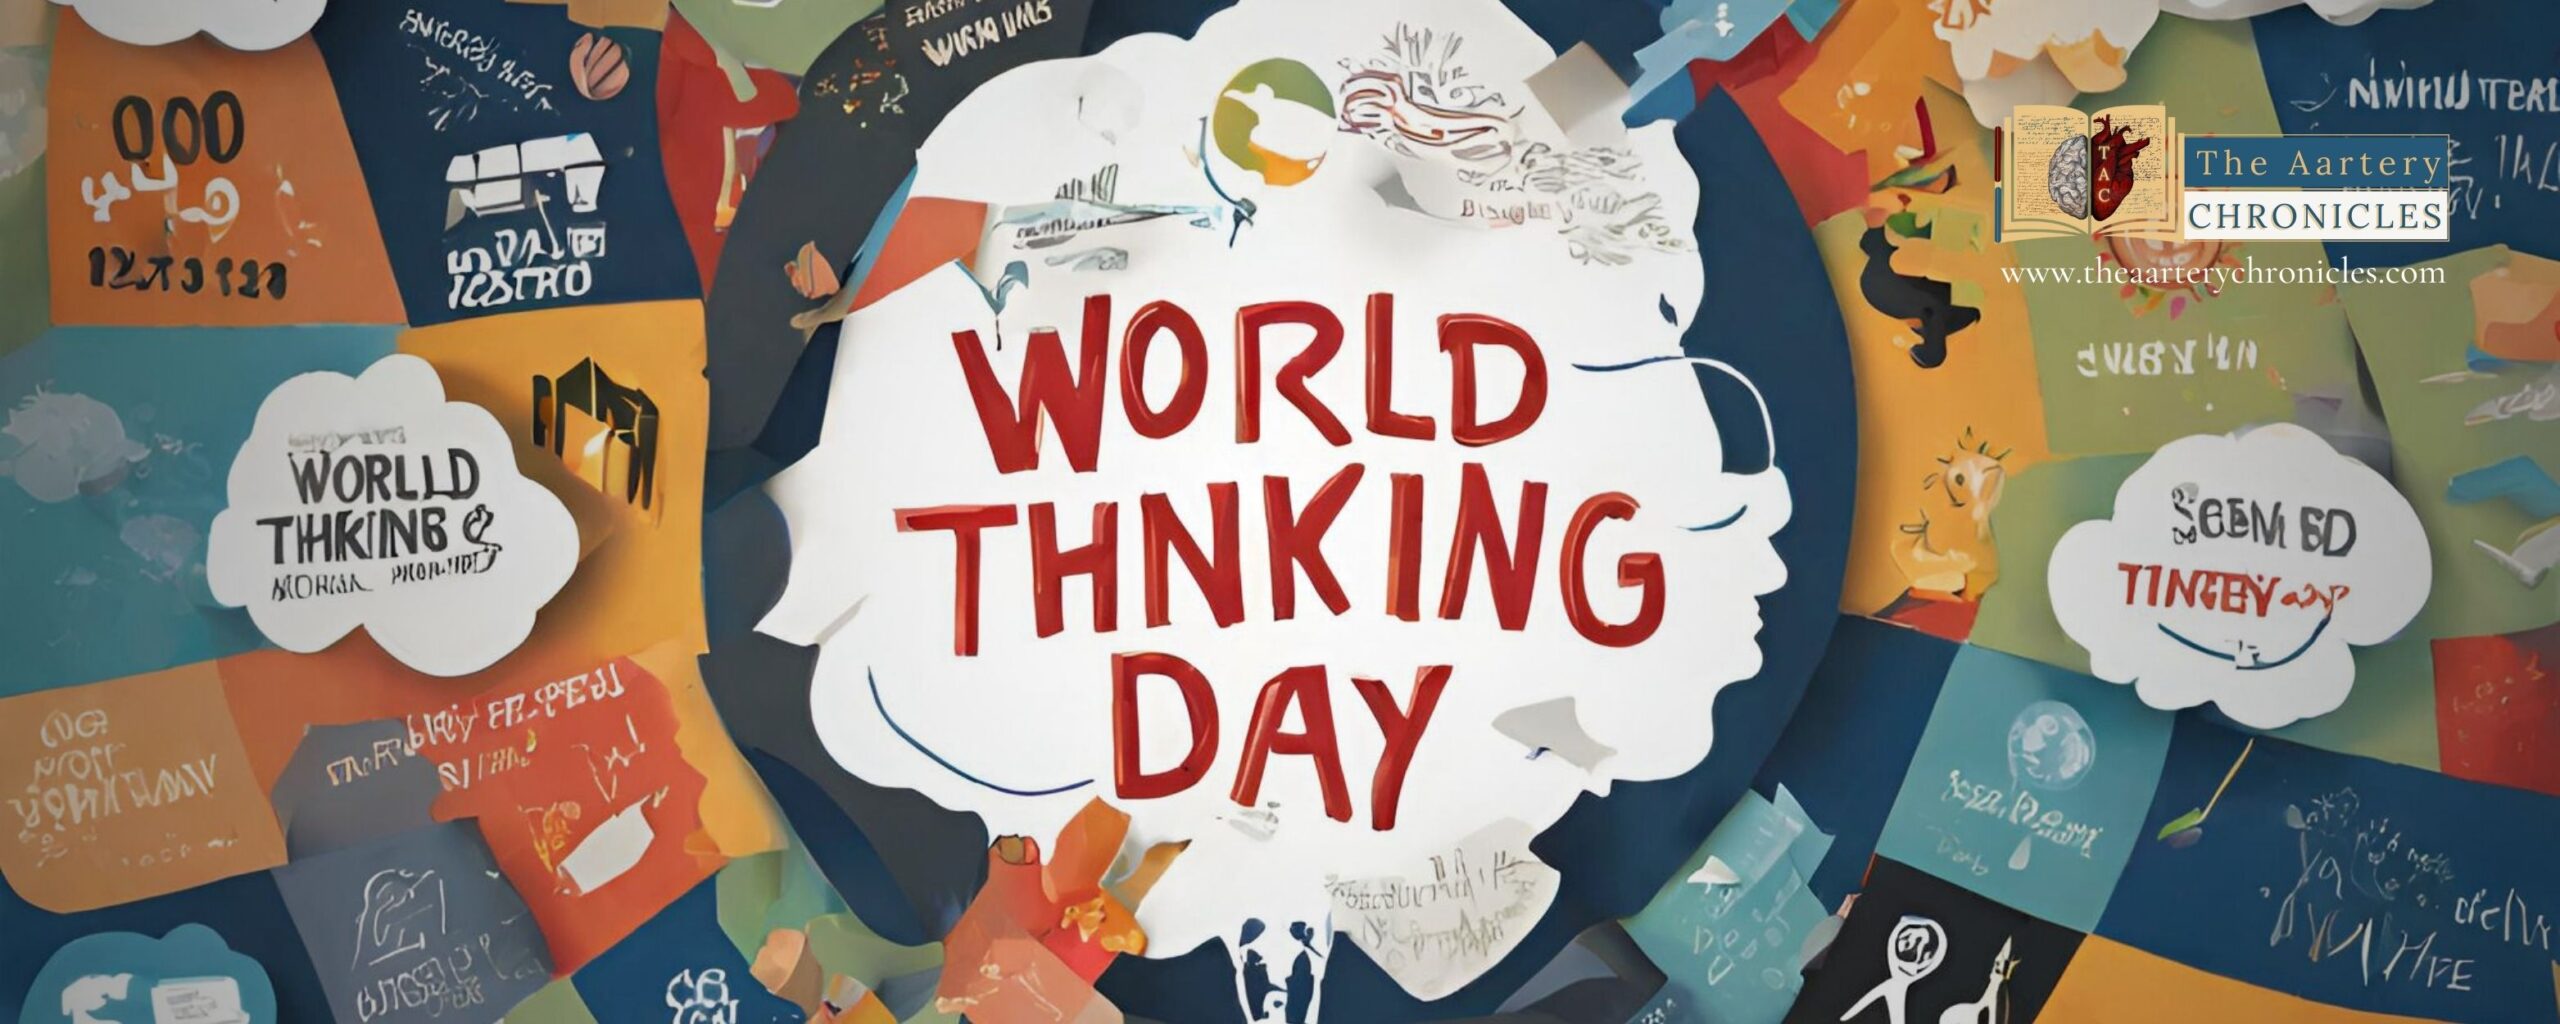 world thinking day